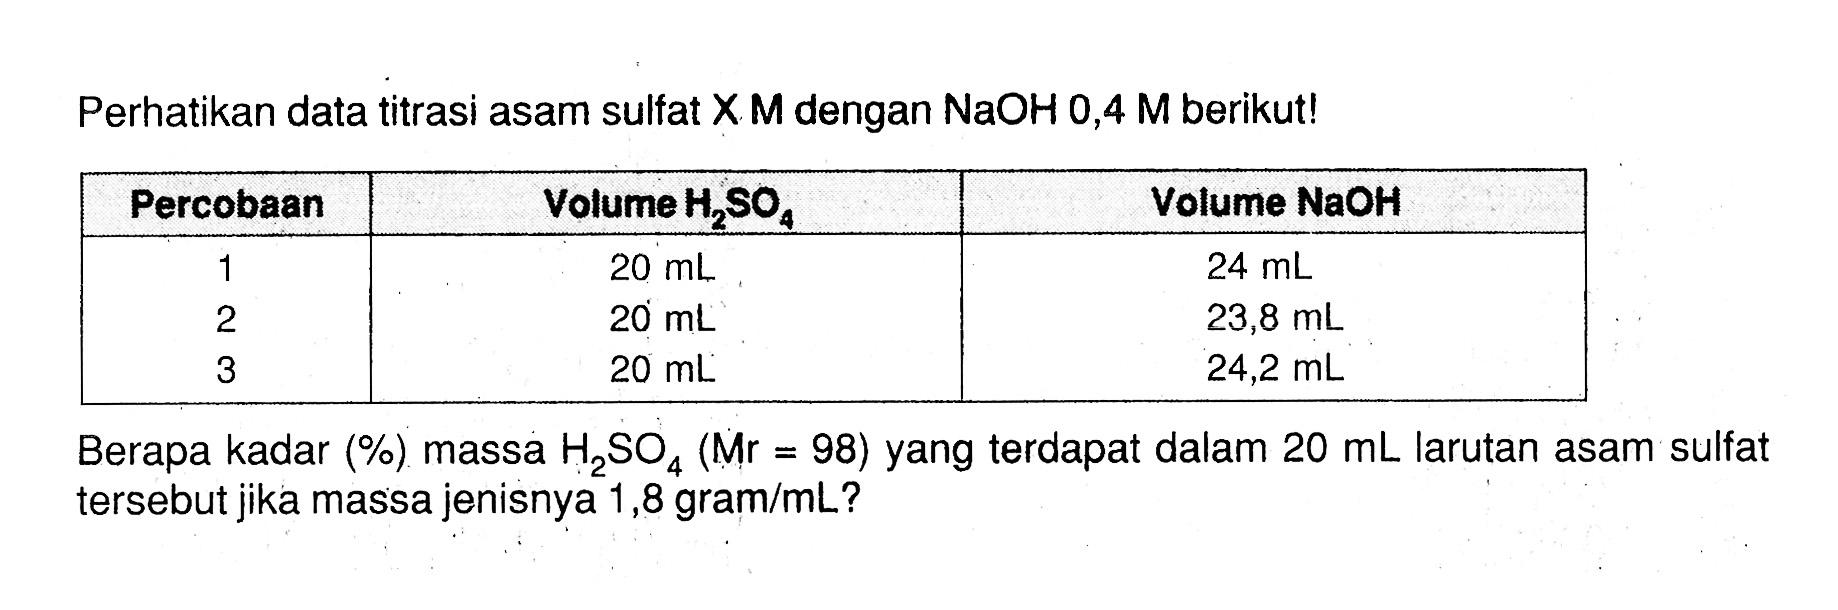 Perhatikan data titrasi asam sulfat  X M  dengan  N a O H 0,4 M  berikut!Percobaan  Volume  H2SO4   Volume  NaOH  1   20 mL    24 mL  2   20 mL    23,8 mL  3   20 mL    24,2 mL  Berapa kadar (%) massa H2SO4(Mr=98) yang terdapat dalam 20 mL. larutan asam sulfat tersebut jika massa jenisnya 1,8 gram/mL?